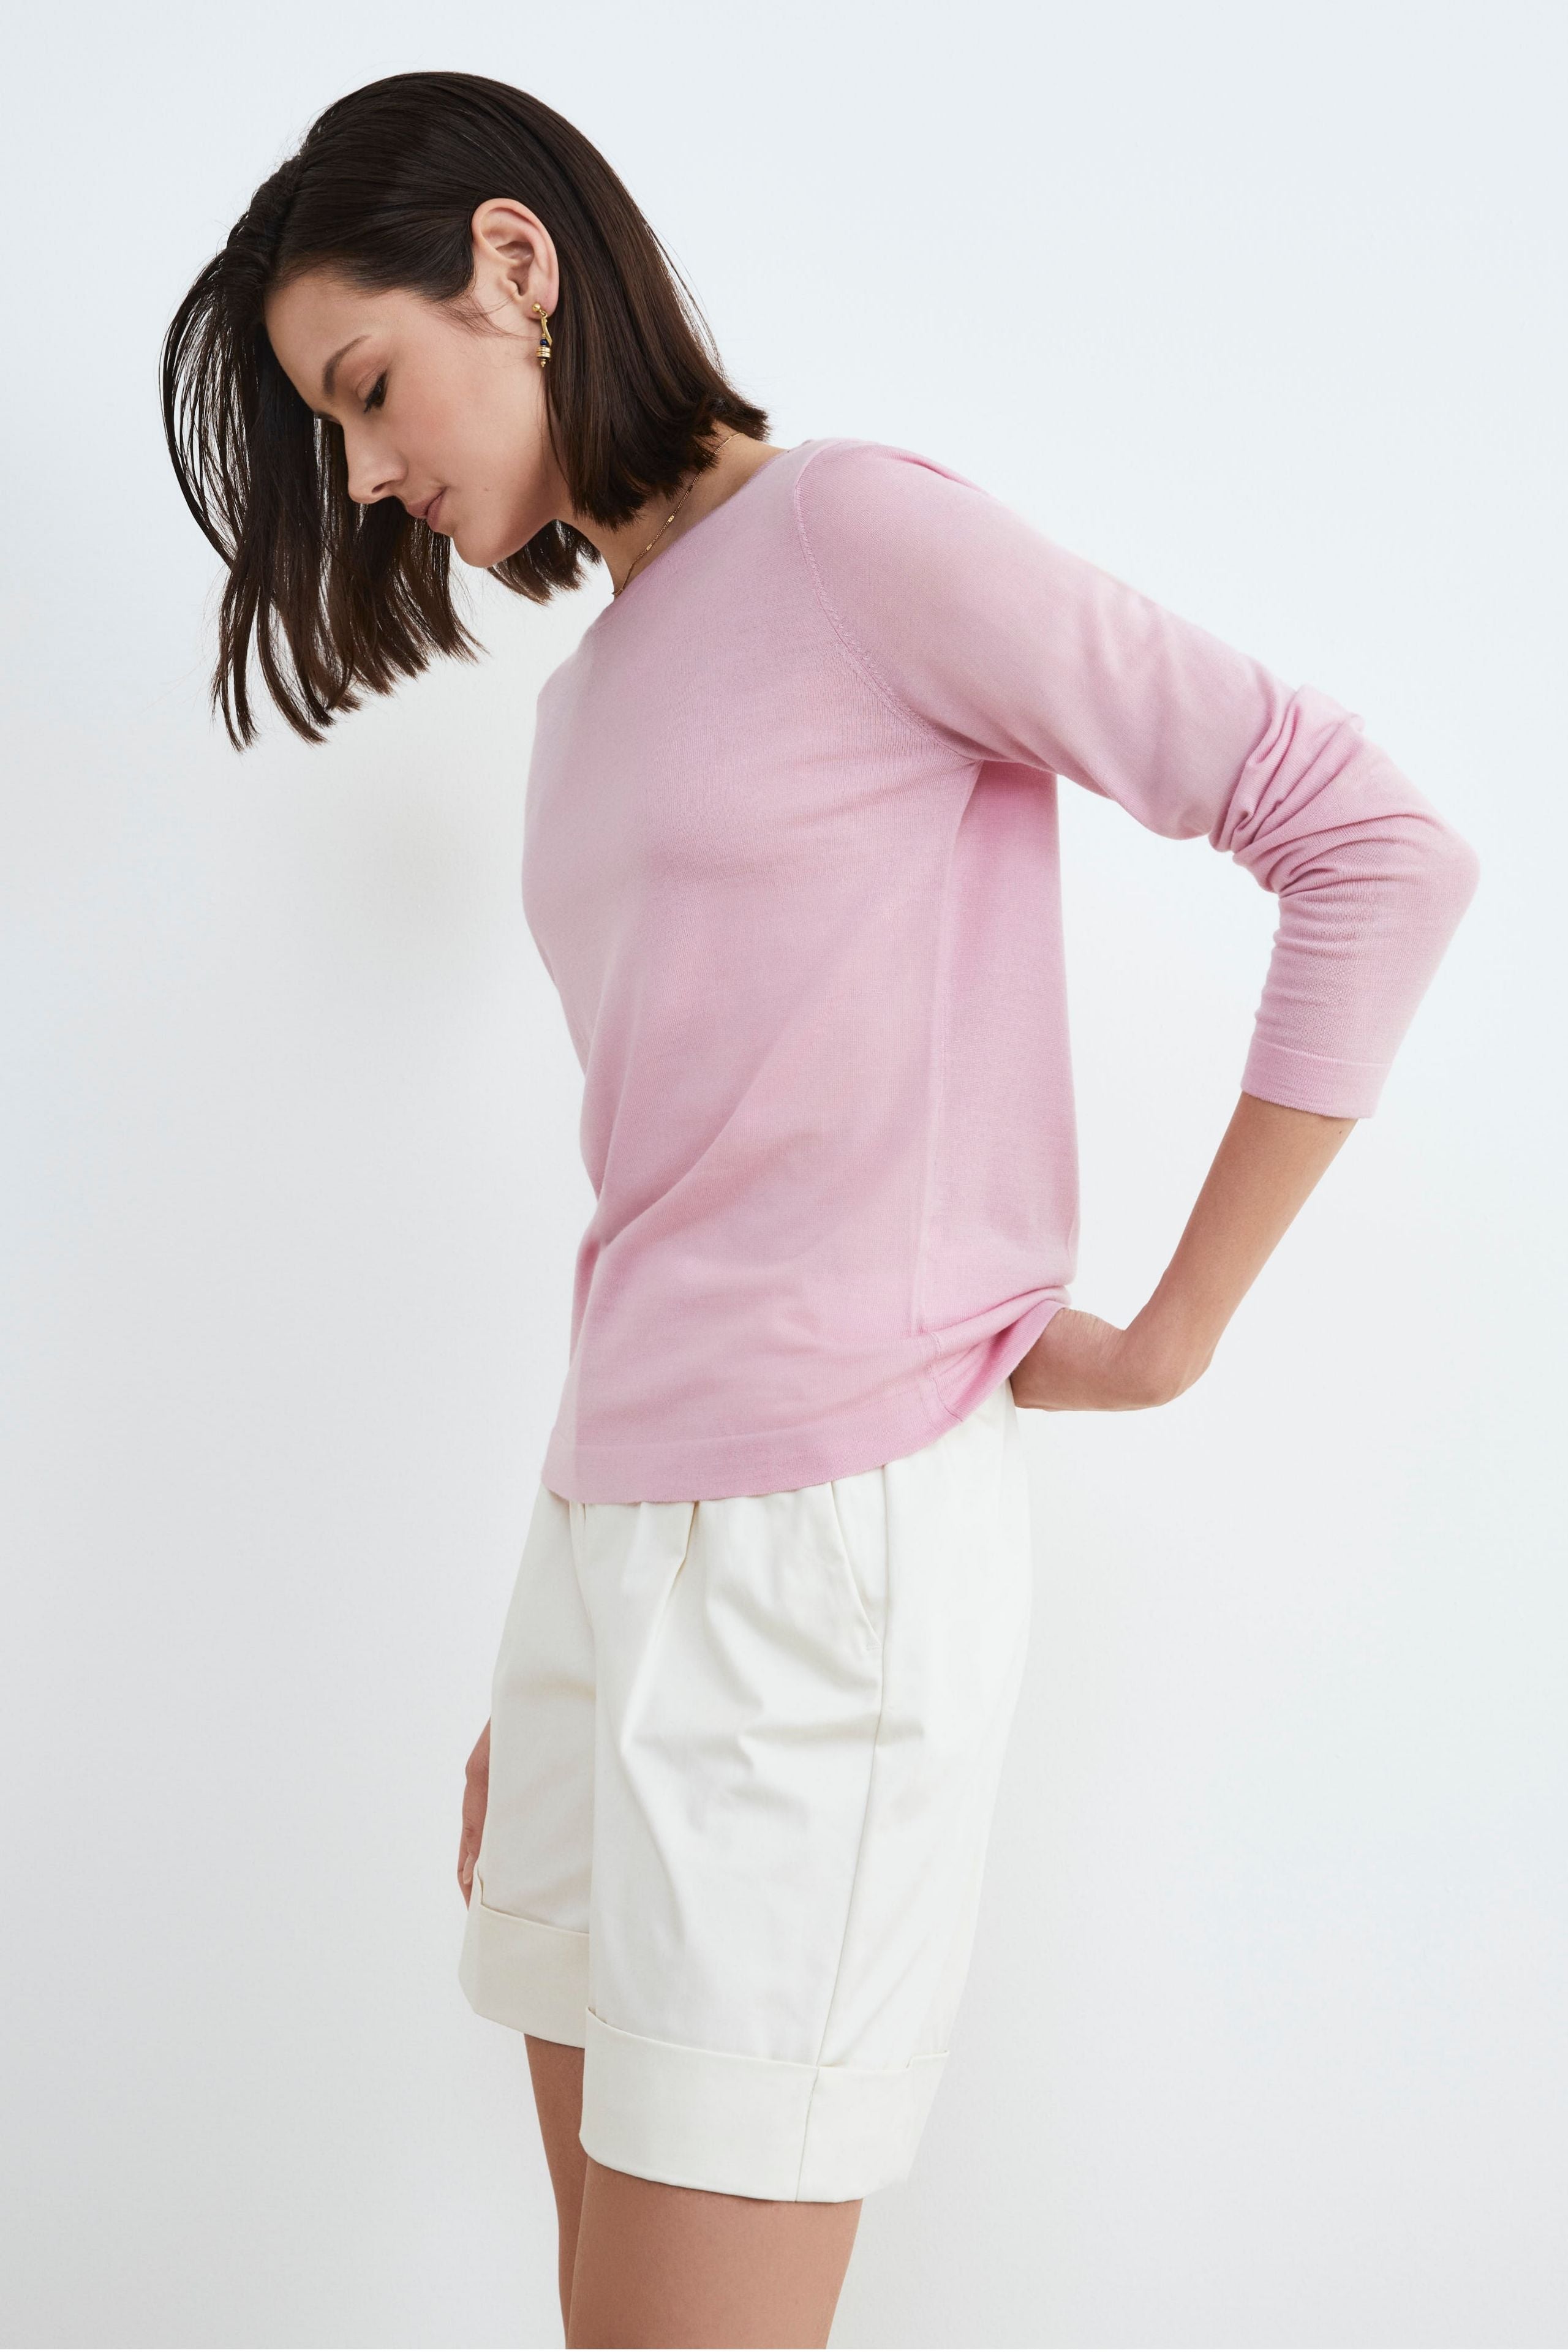 Women’s crewneck sweater - Old pink